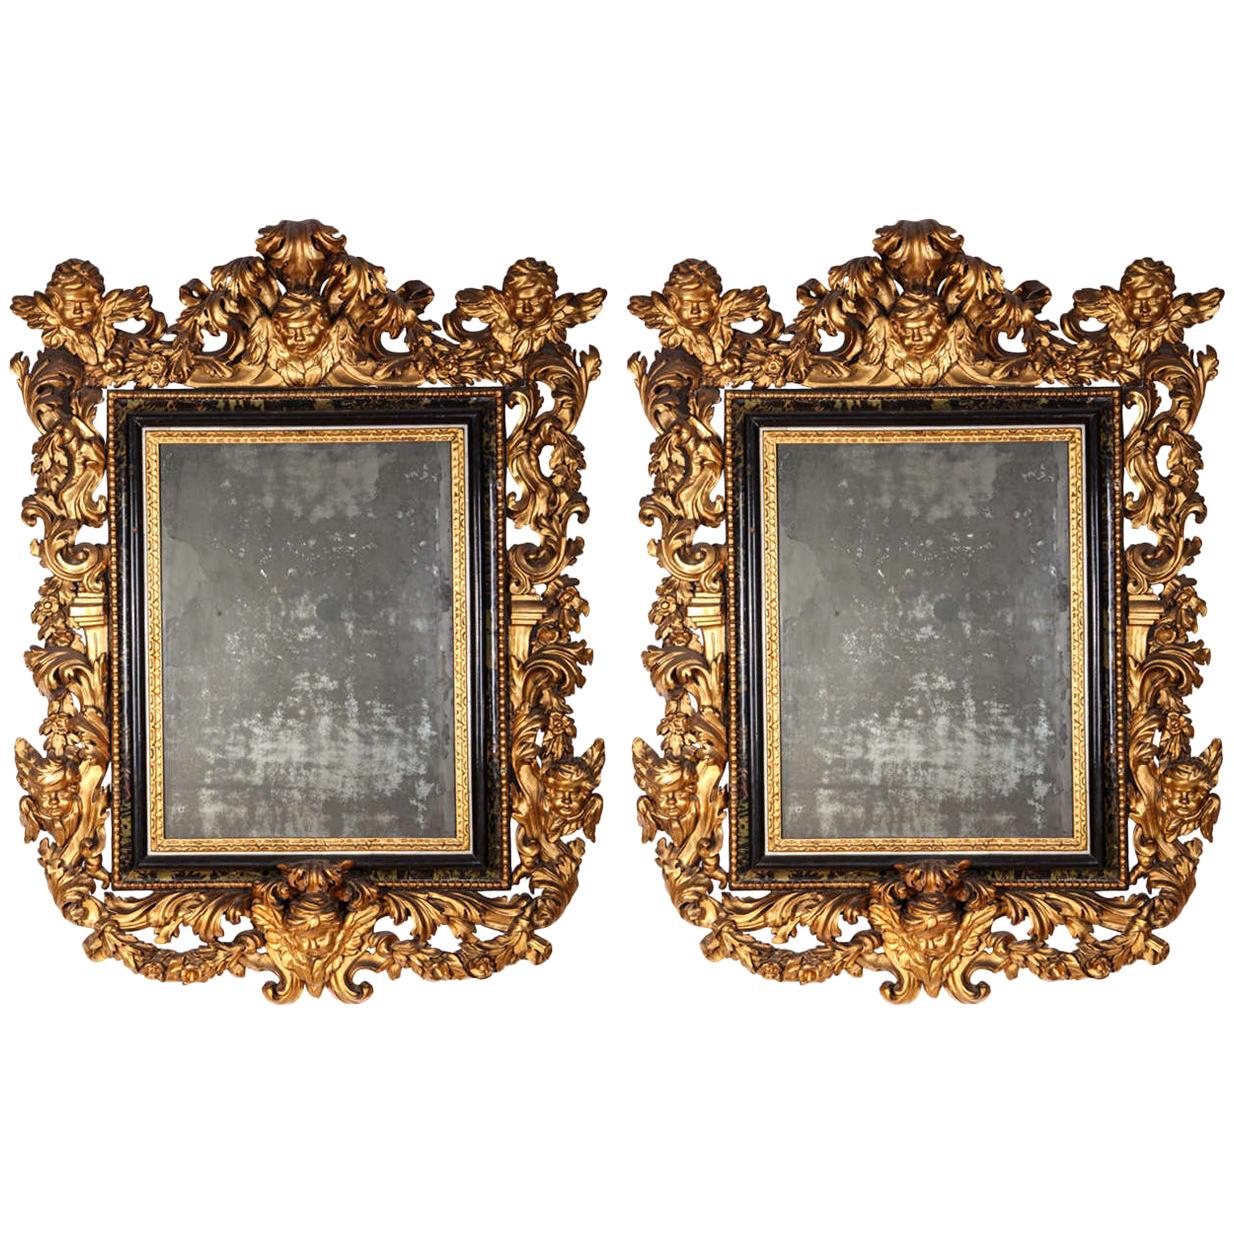 Pair of Rare Italian 17th Century Giltwood Baroque Mirrors, 1680